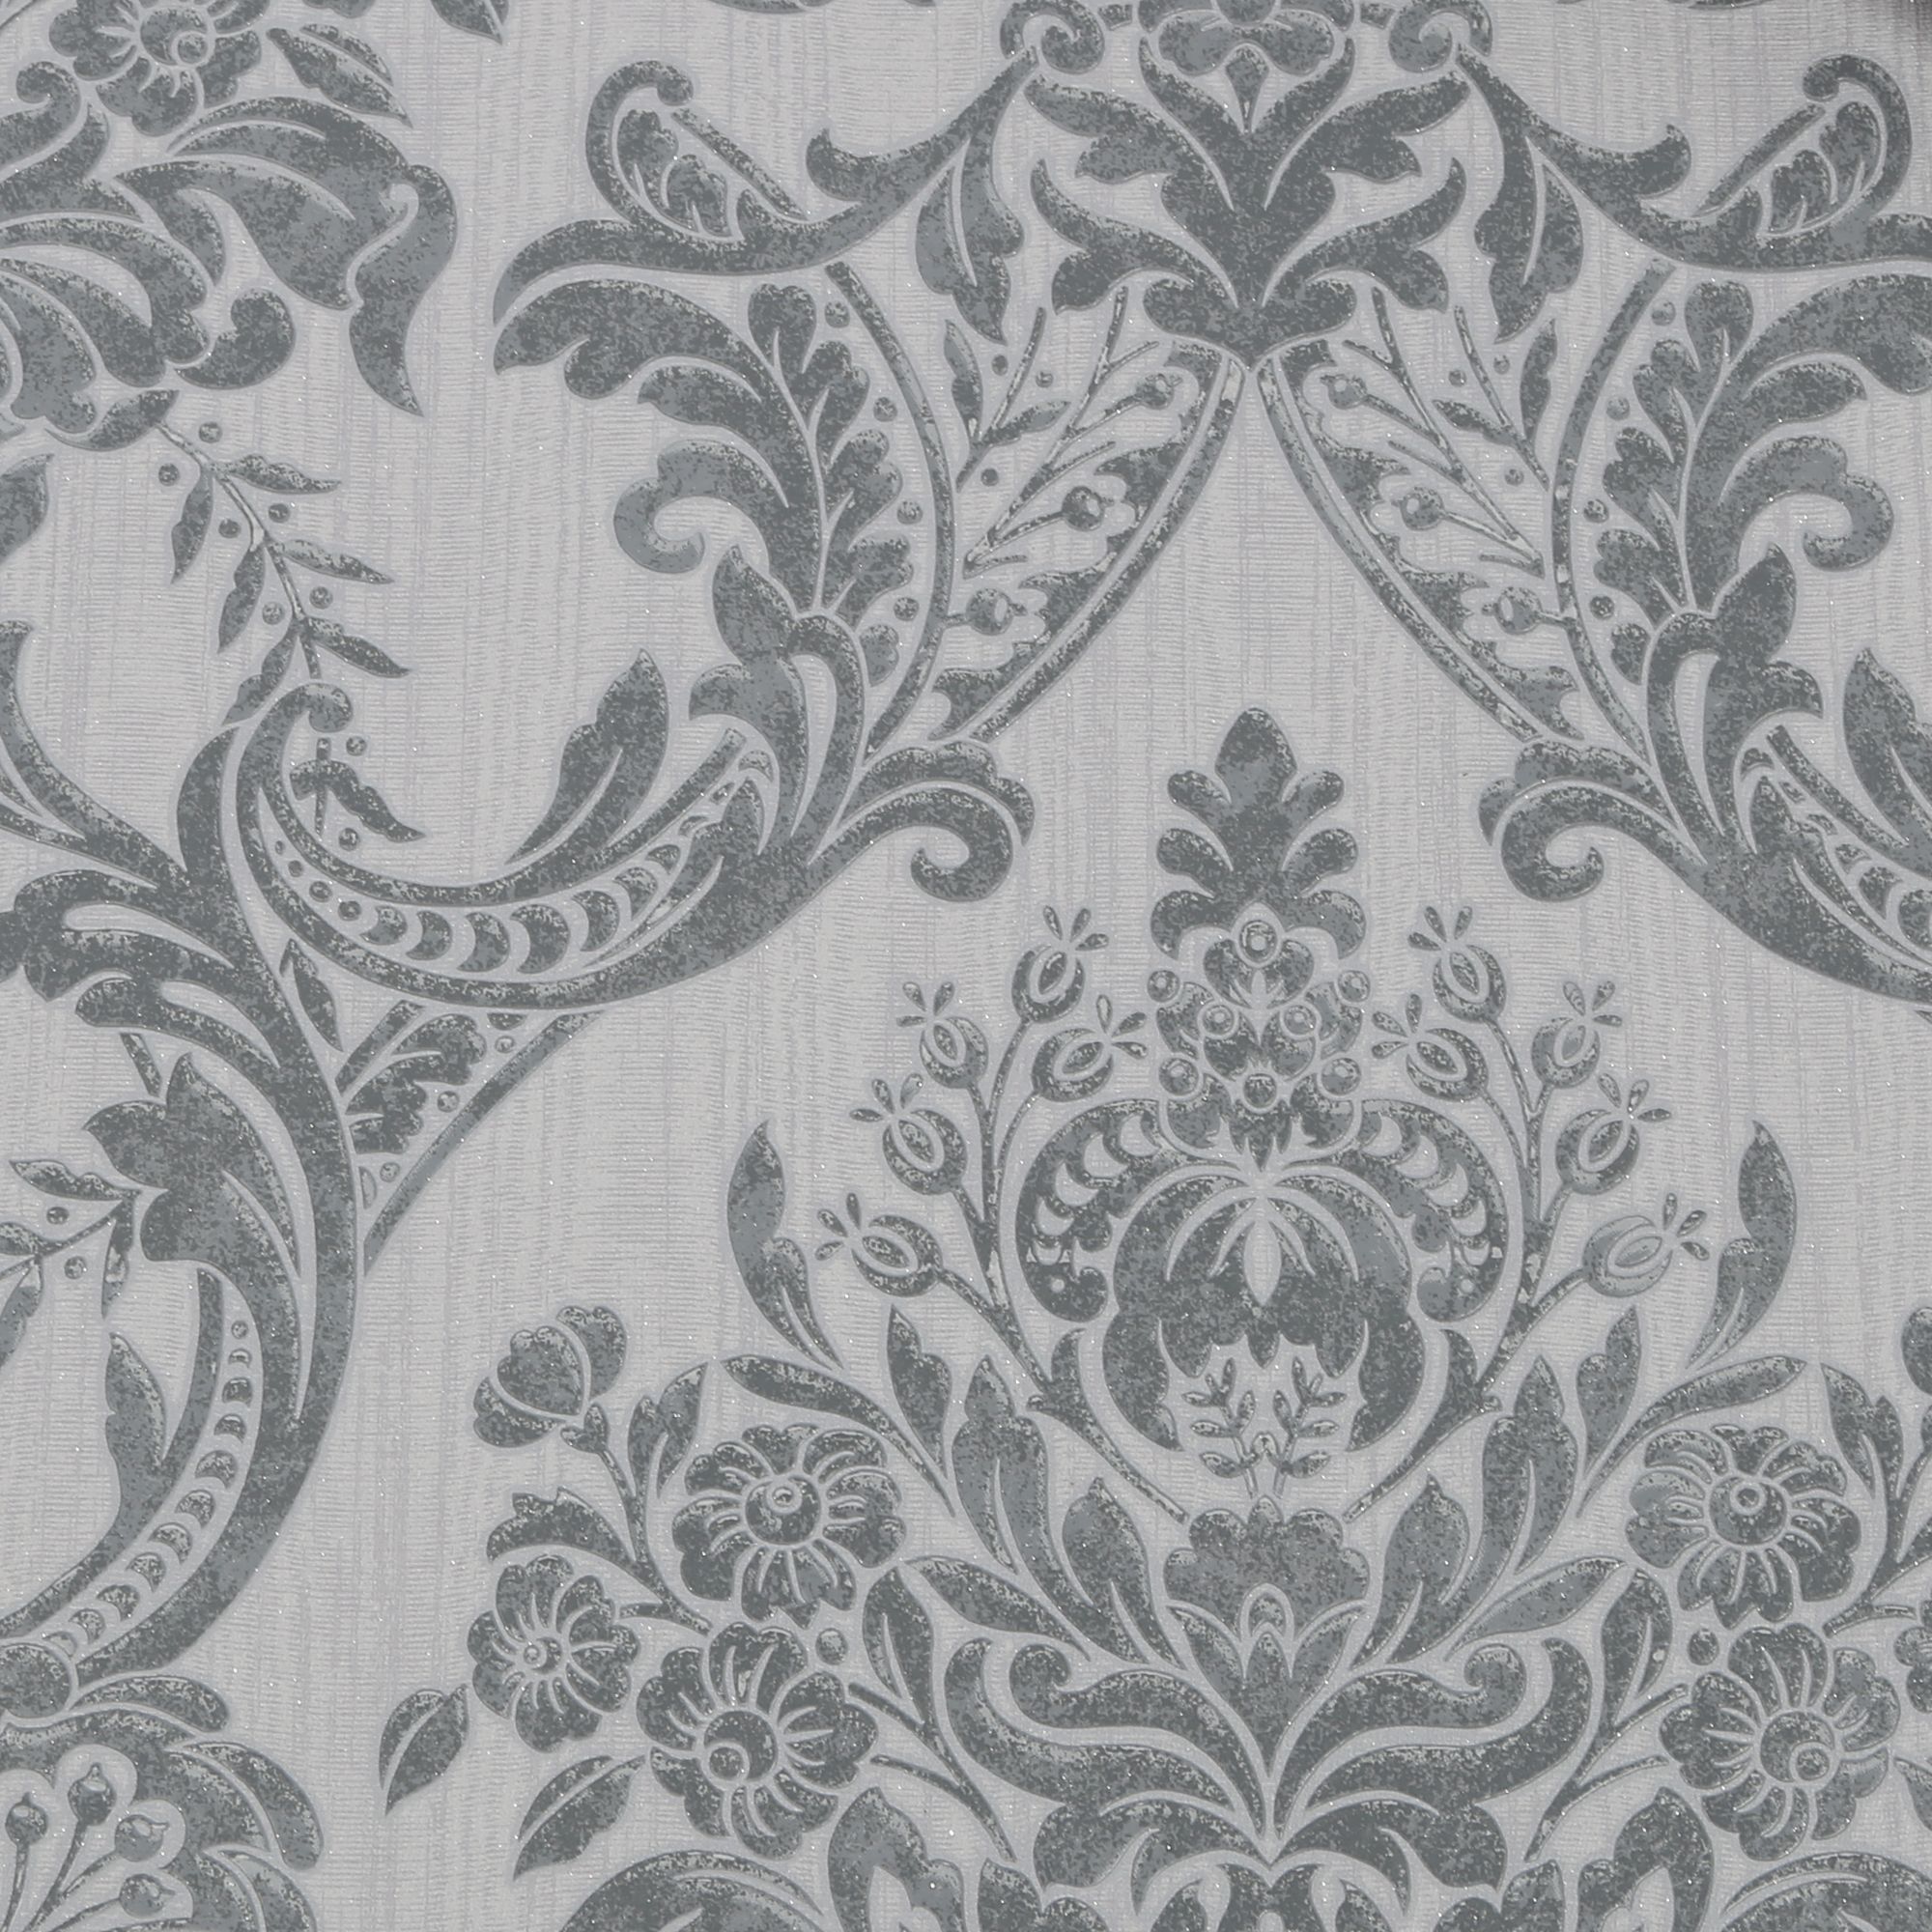 Boutique Baroque Grey Glitter effect Damask Textured Wallpaper